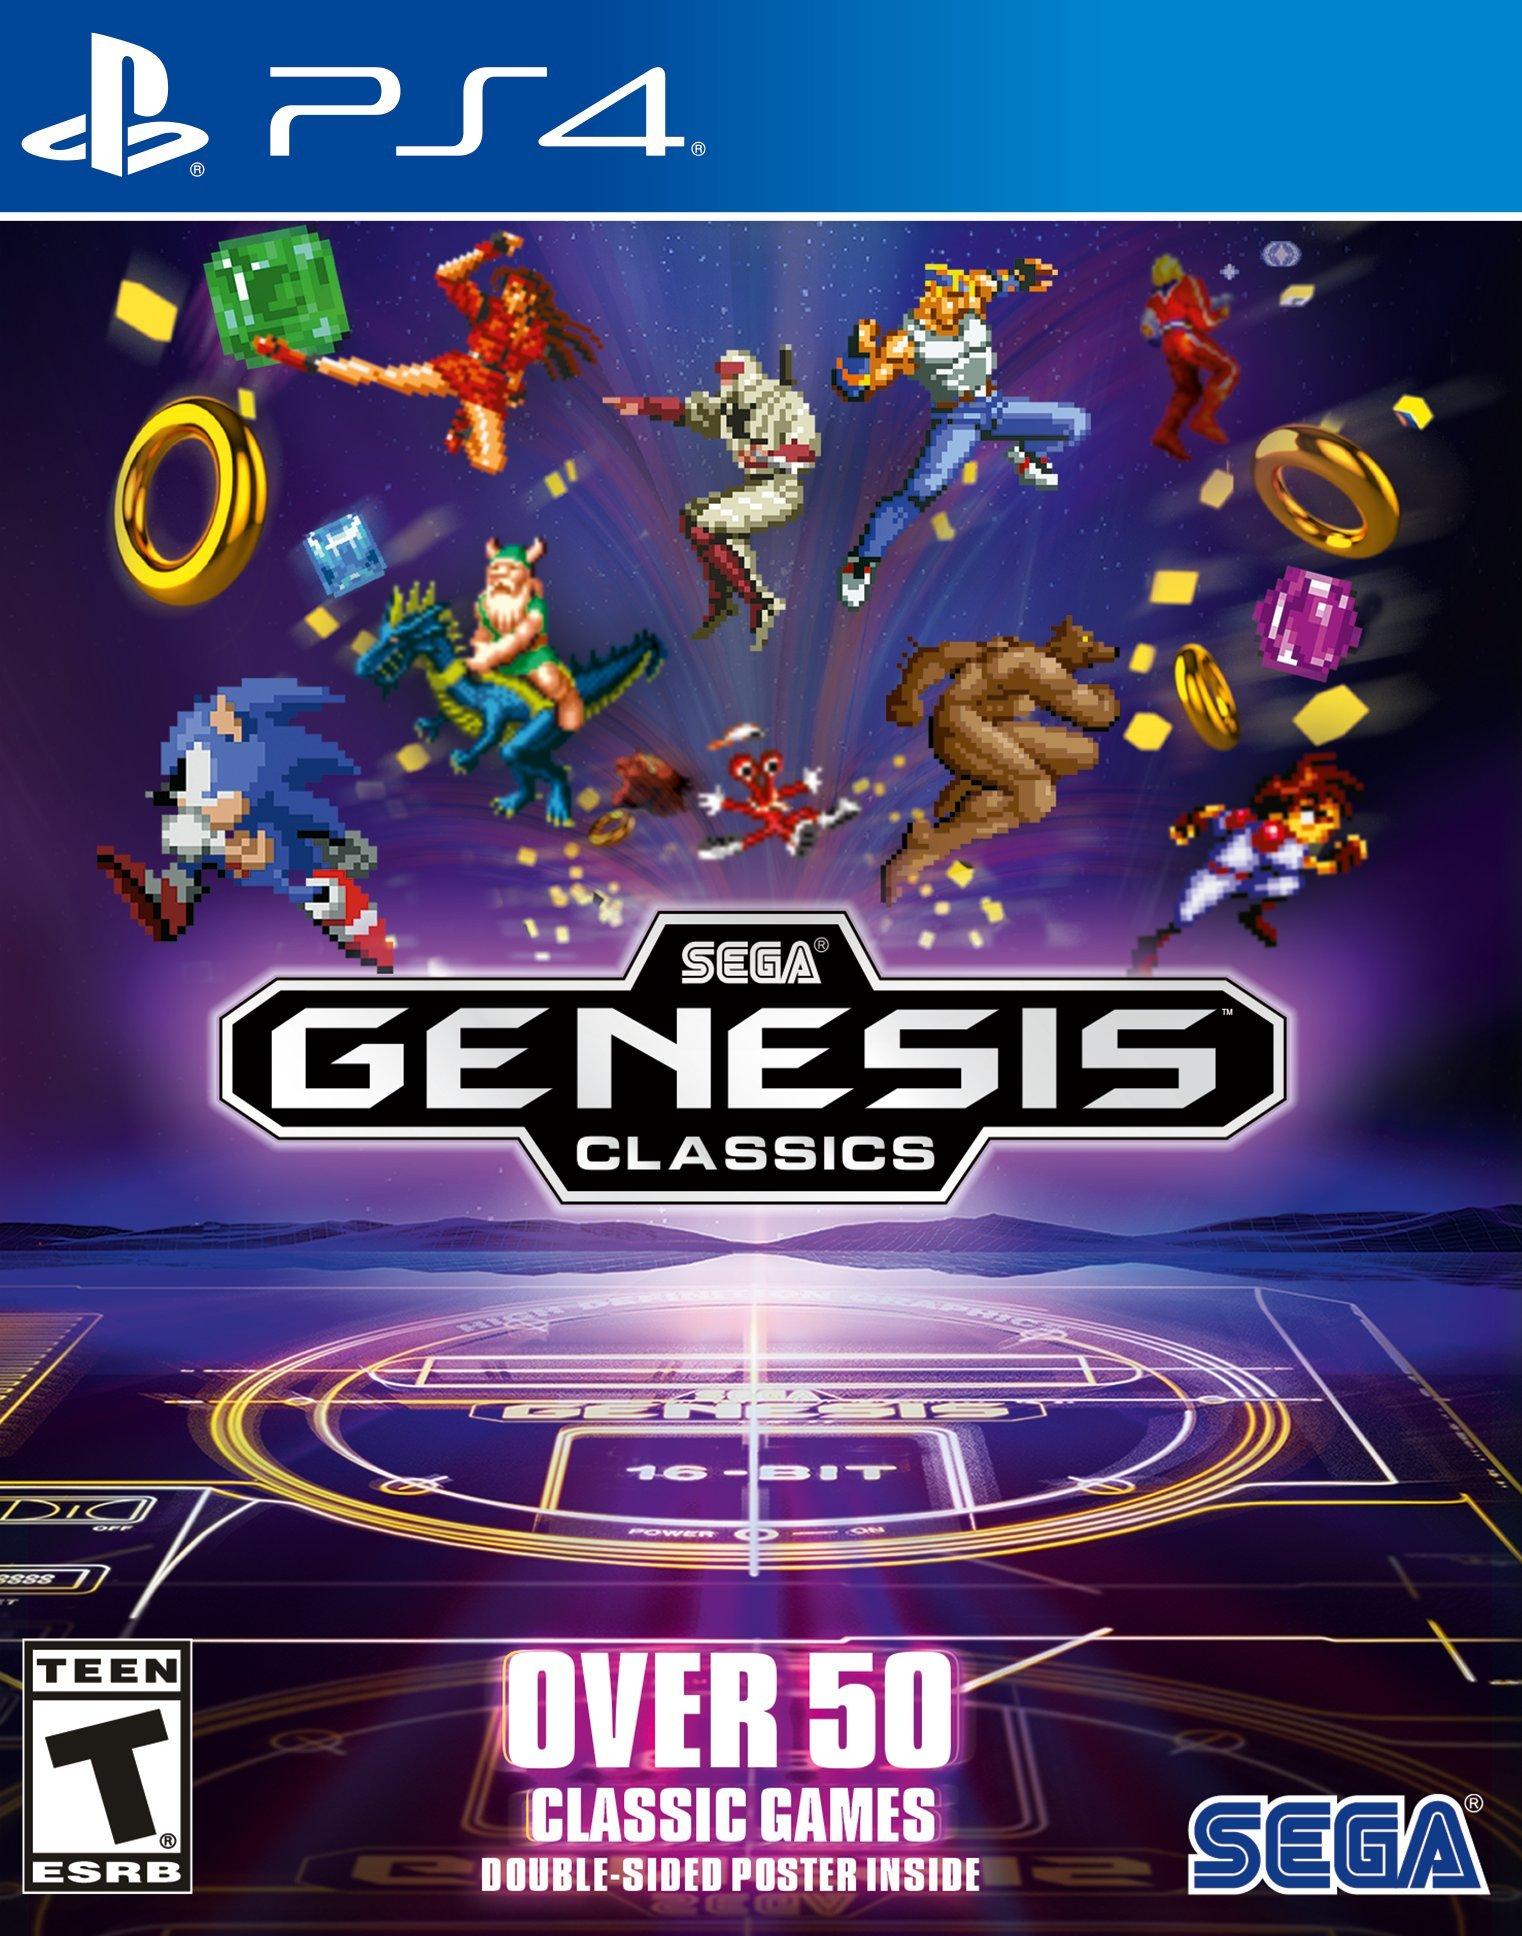 Play Sonic Classic Heroes Online - Sega Genesis Classic Games